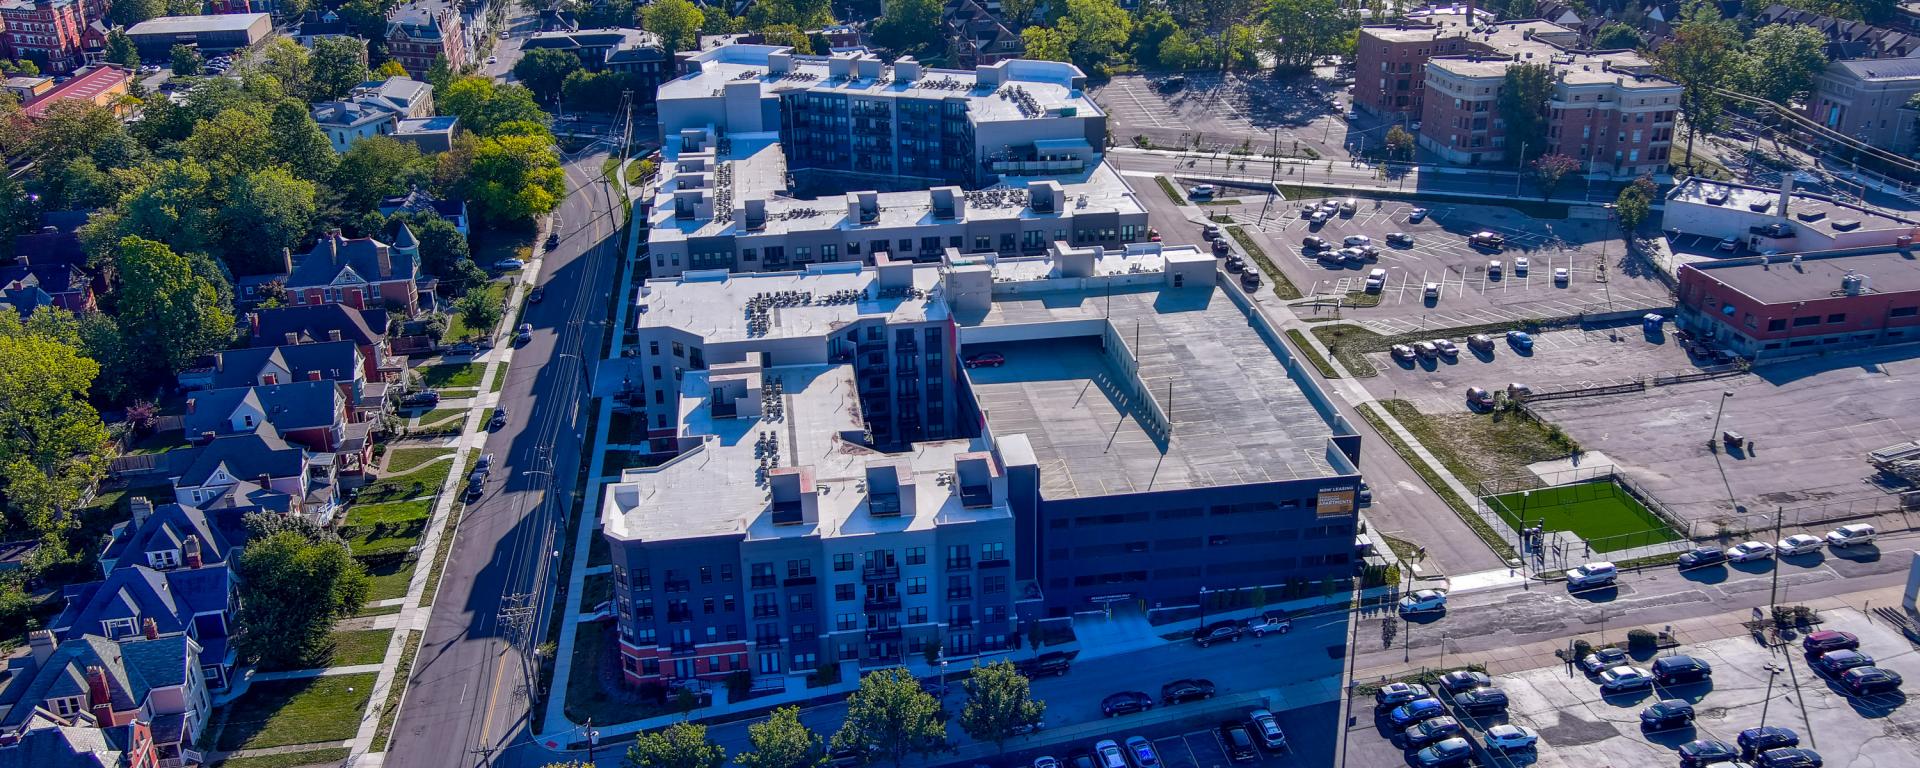 aerial photo of apartment building in urban neighborhood